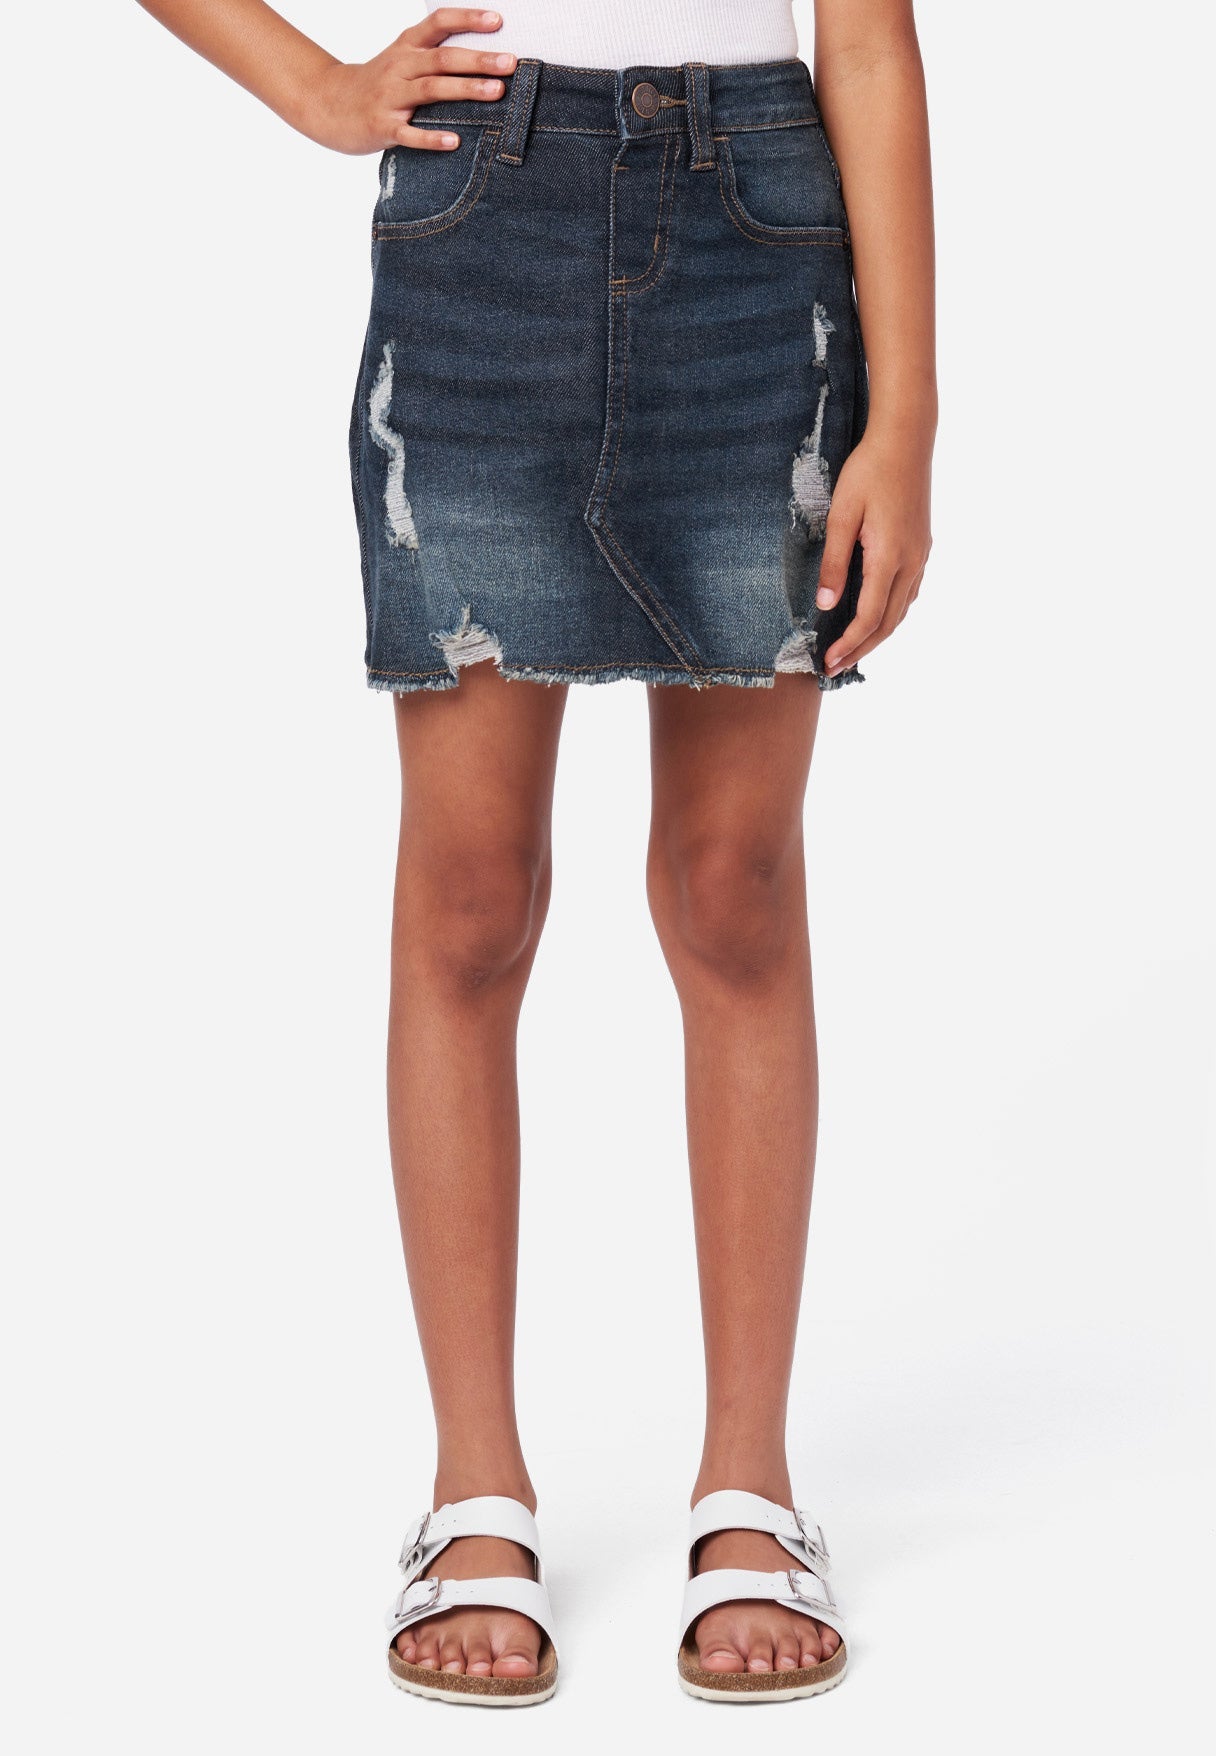 Justice Girl's Distressed Mini Denim Skirt in Dark Wash, Size 12